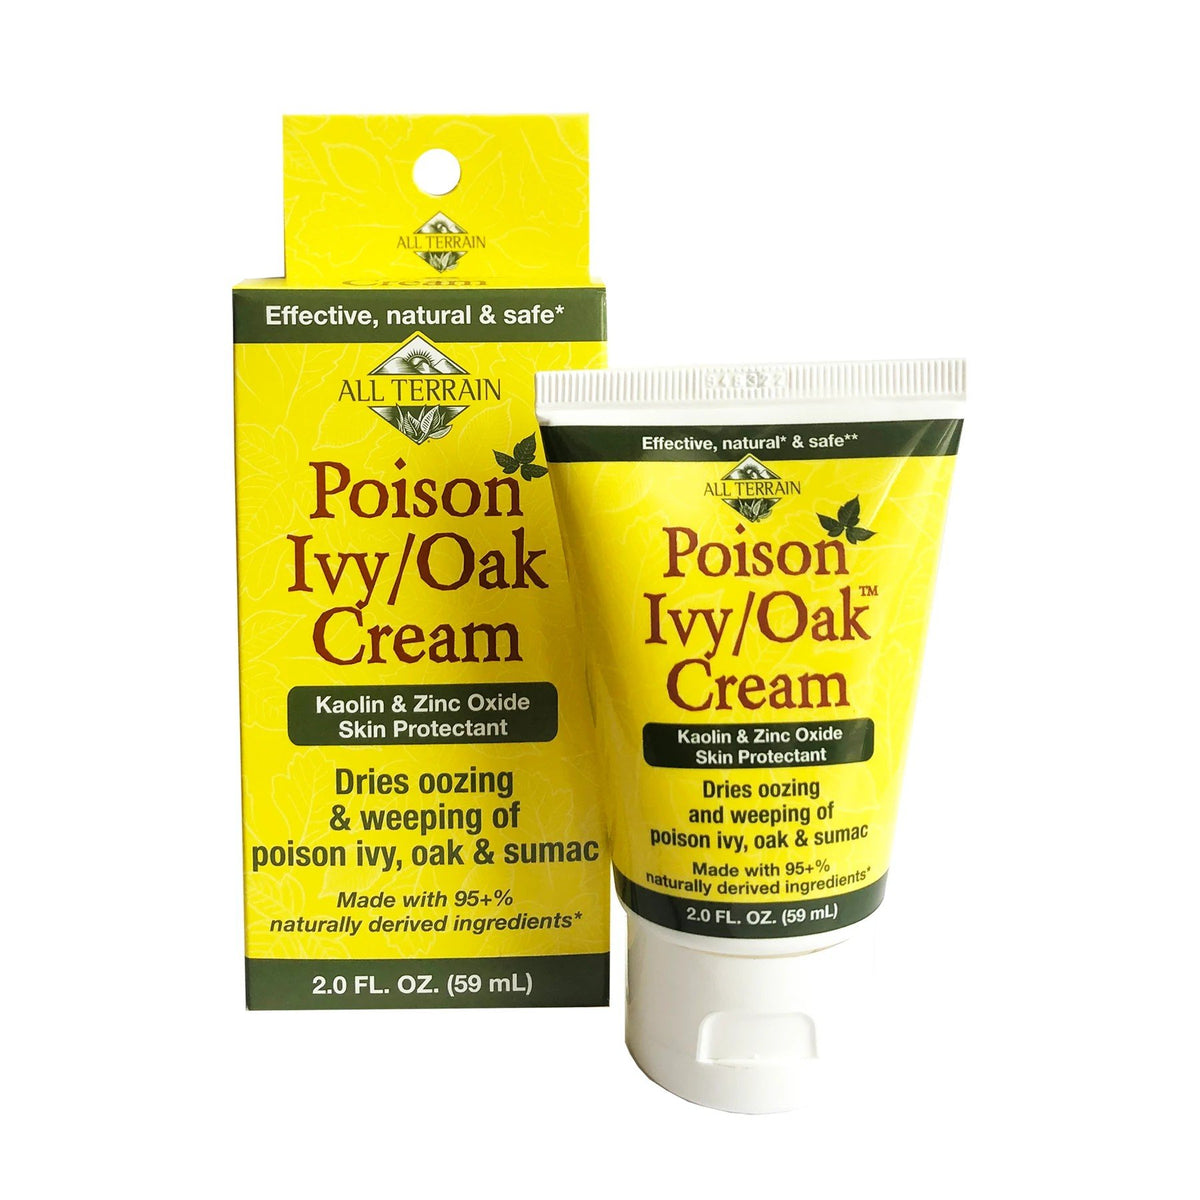 All Terrain Poison Ivy/Oak Cream 2 oz Cream